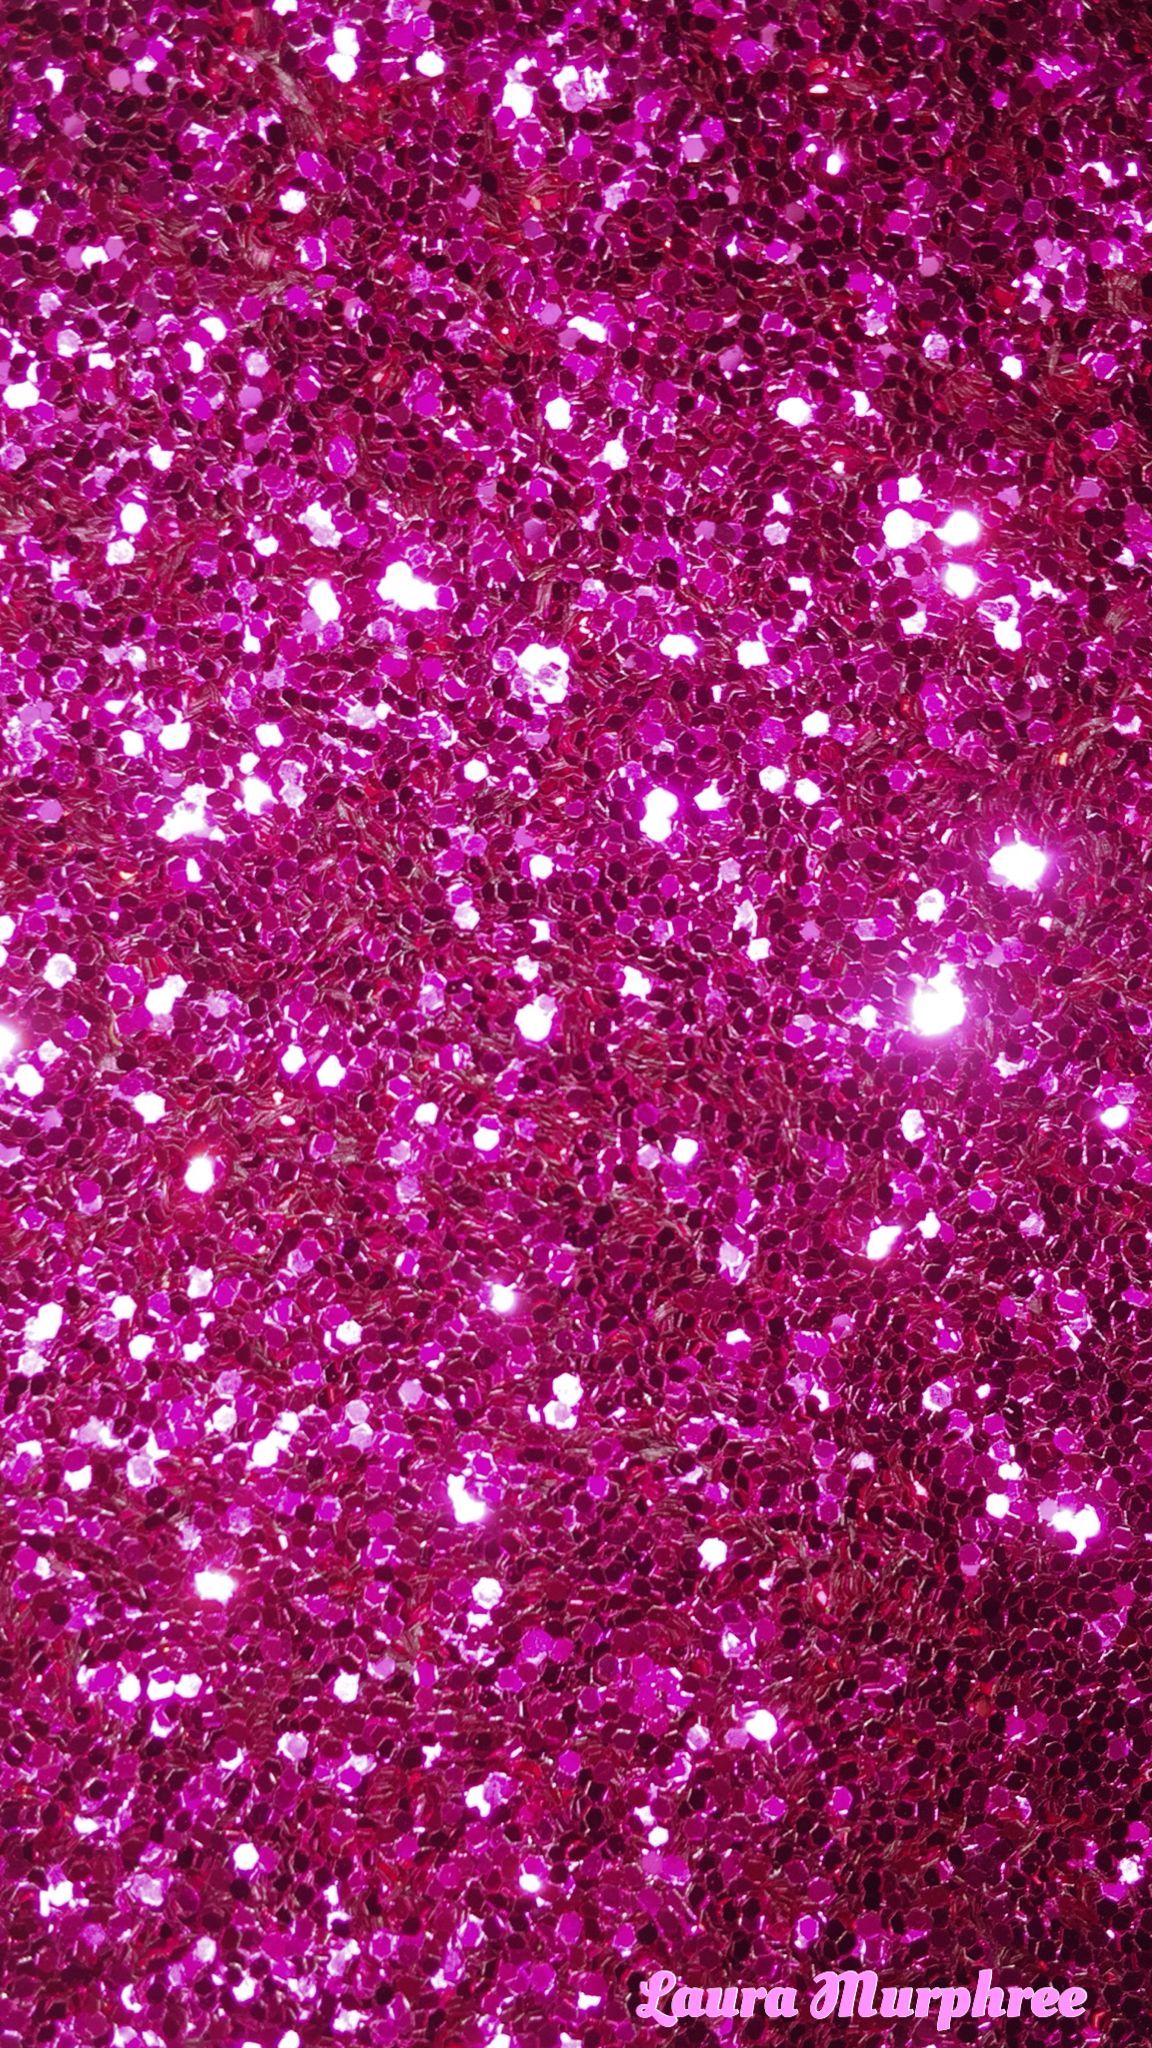 32+] Pink Glitter Backgrounds - WallpaperSafari